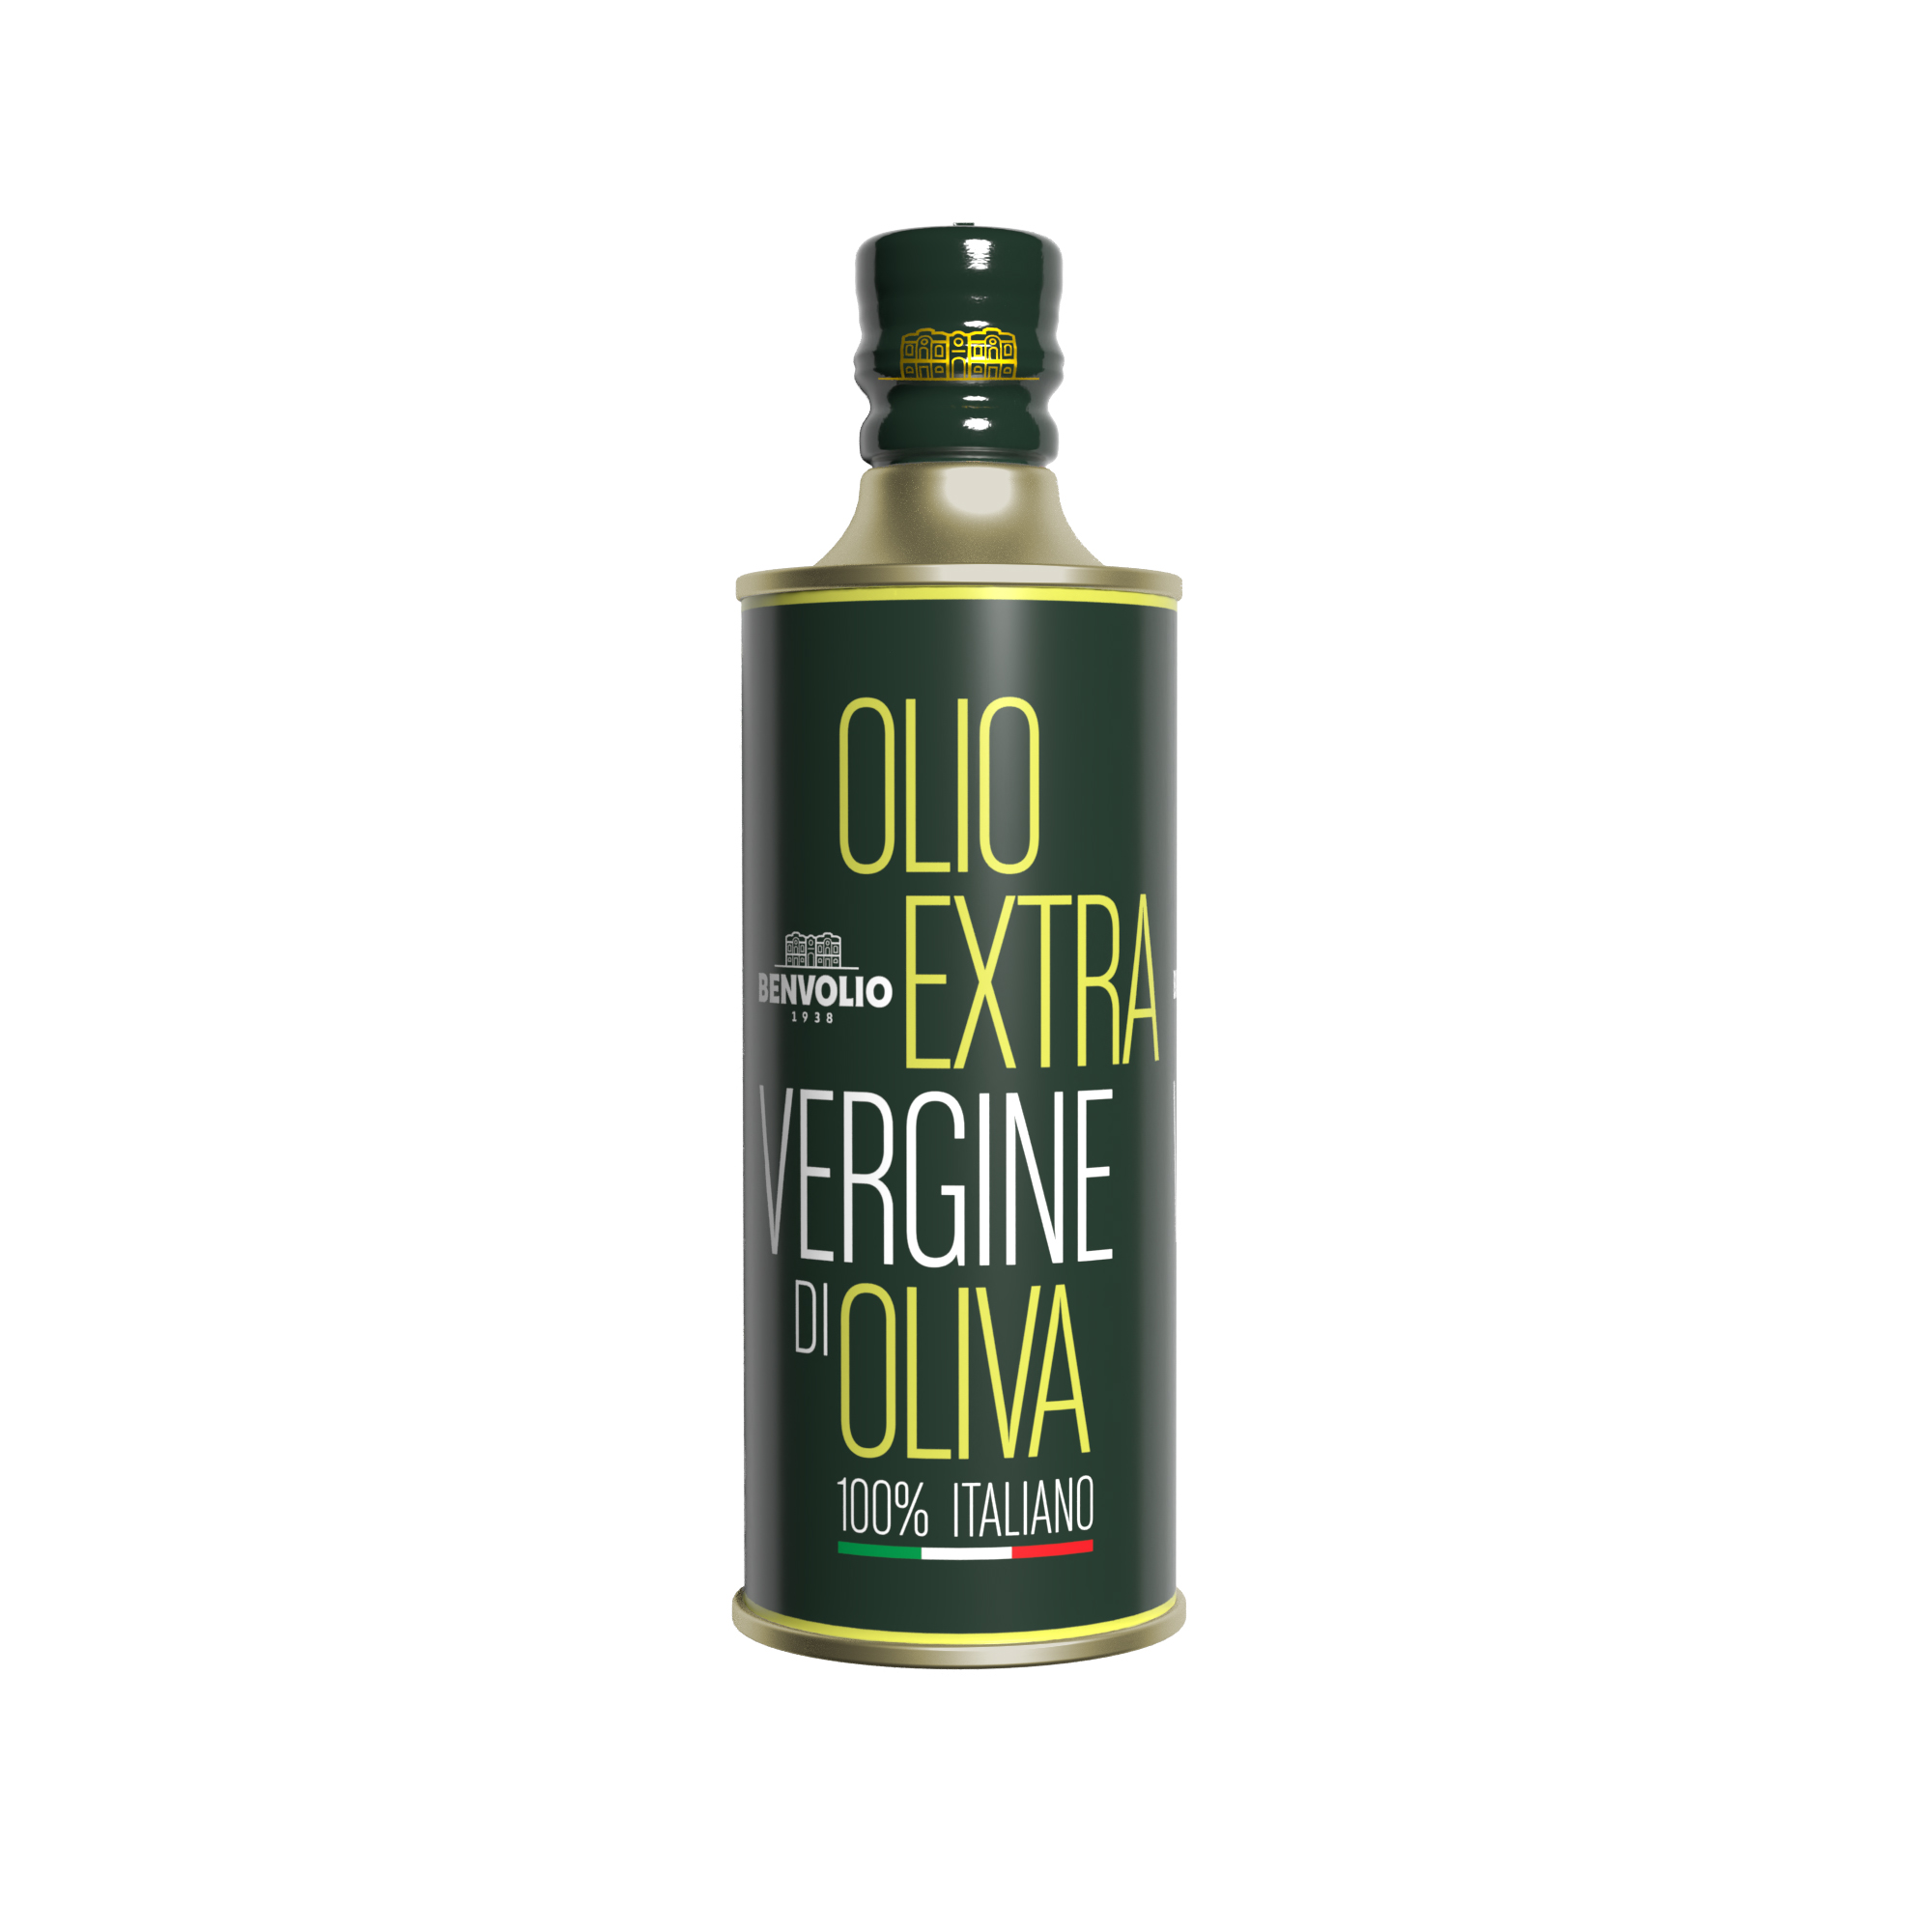 Benvolio 1938 Extra Virgin Olive Oil 100% italian 500 ml